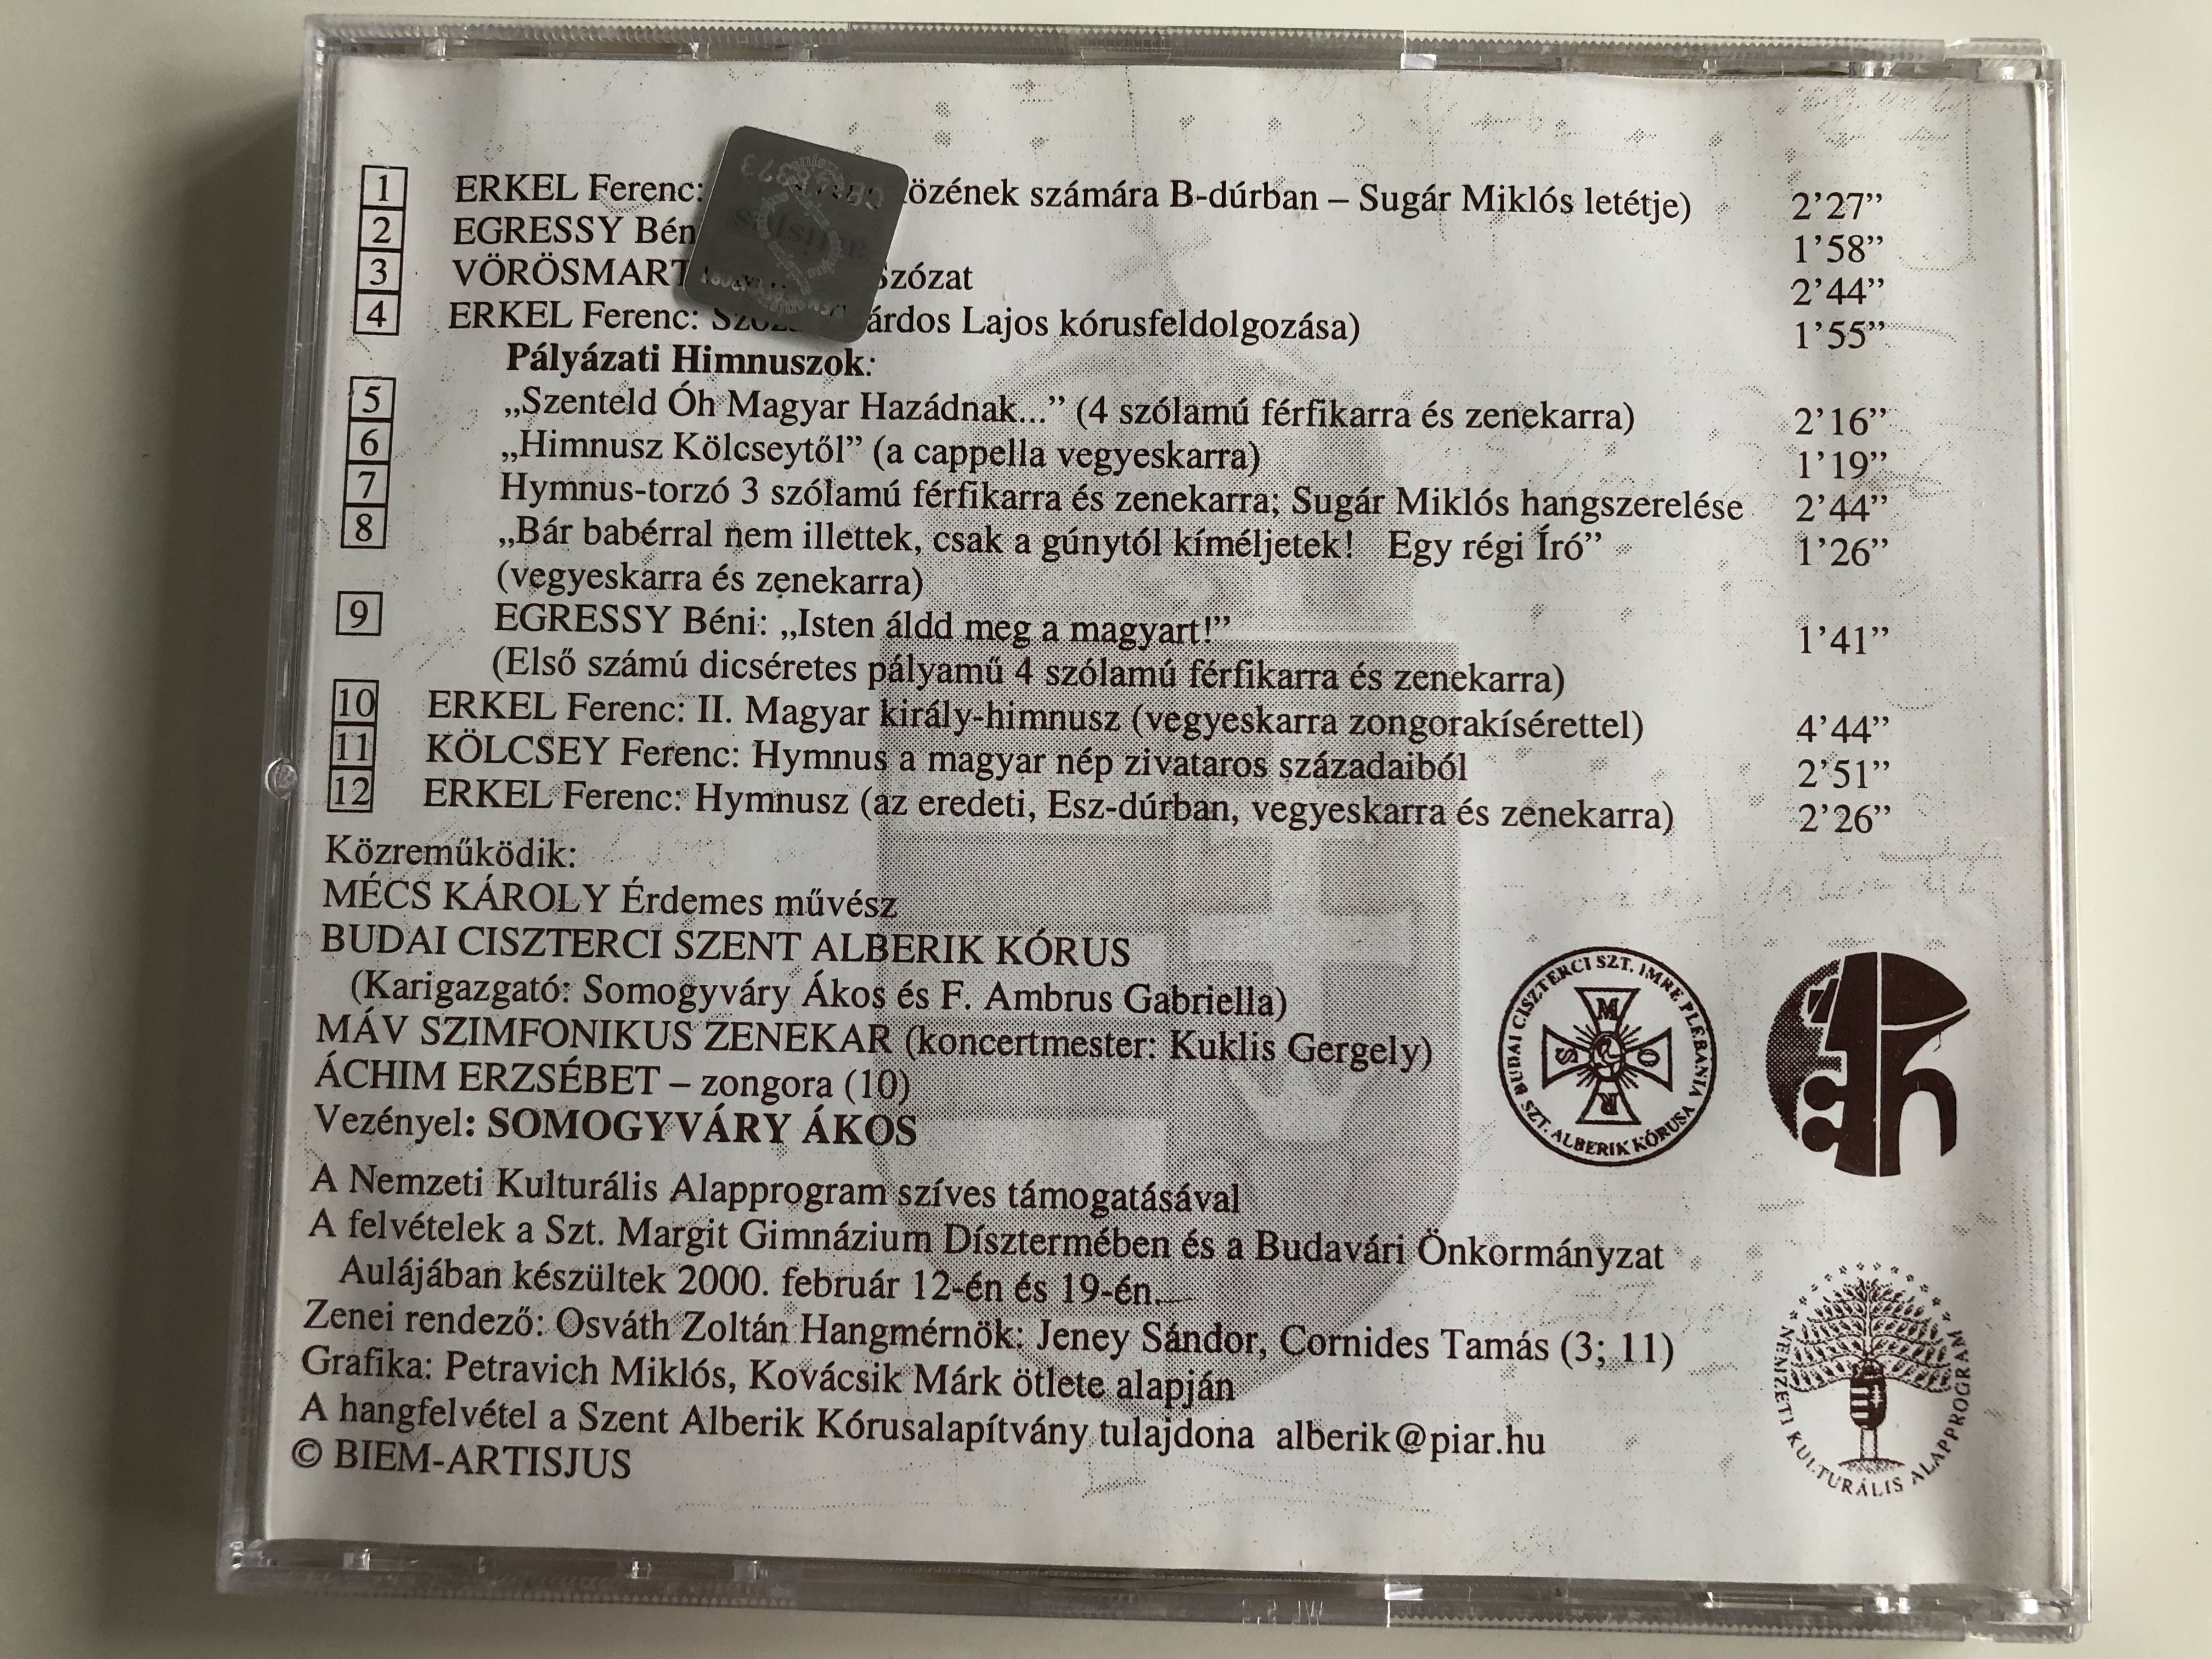 hymnus-audio-cd-2000-sacd-001-10-.jpg